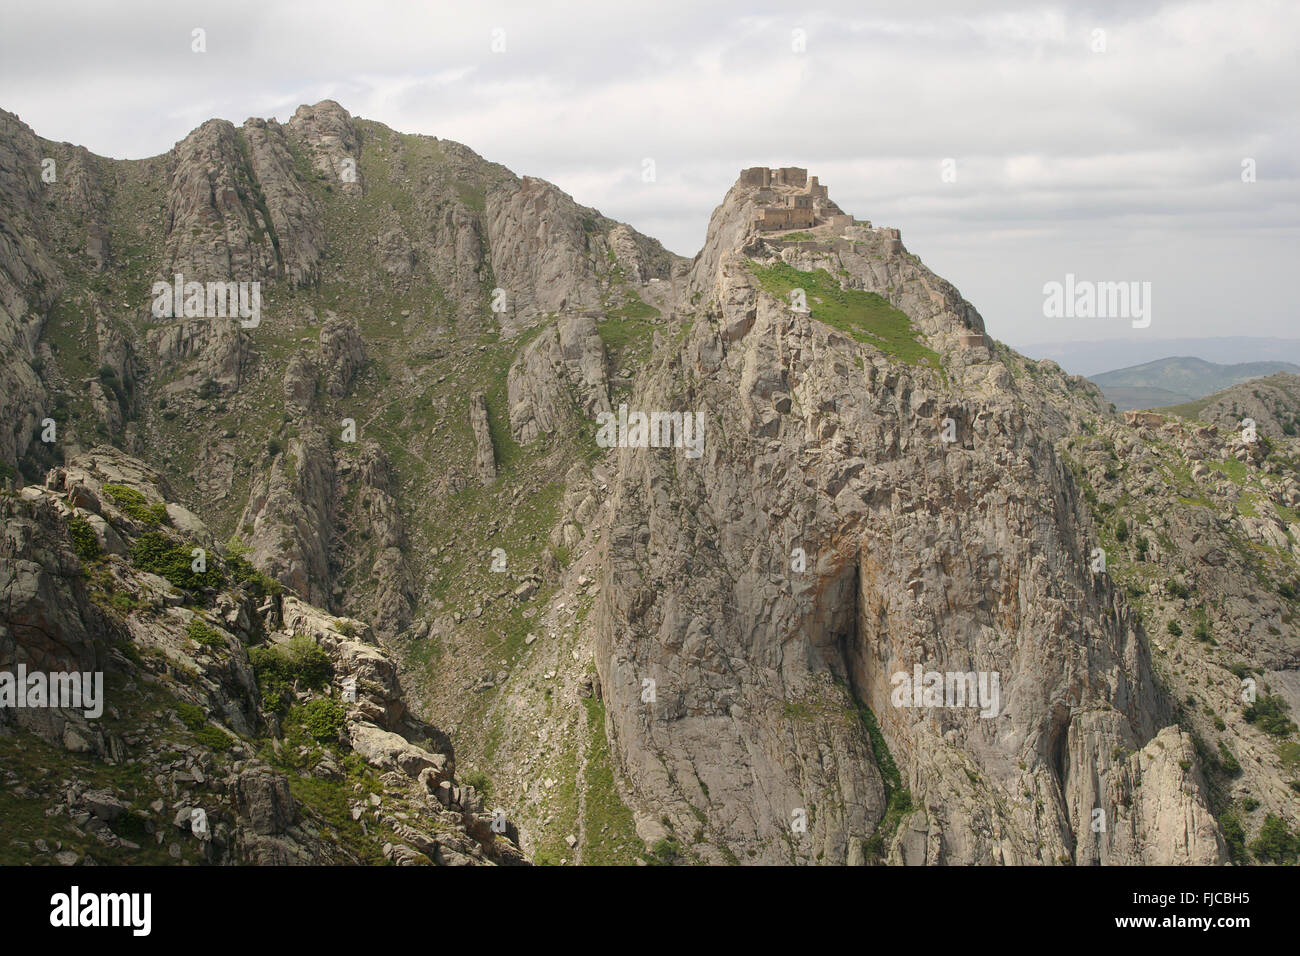 Babak Castle on a steep rocky mountain top, Kaleybar, Azerbaijan Province, Iran Stock Photo